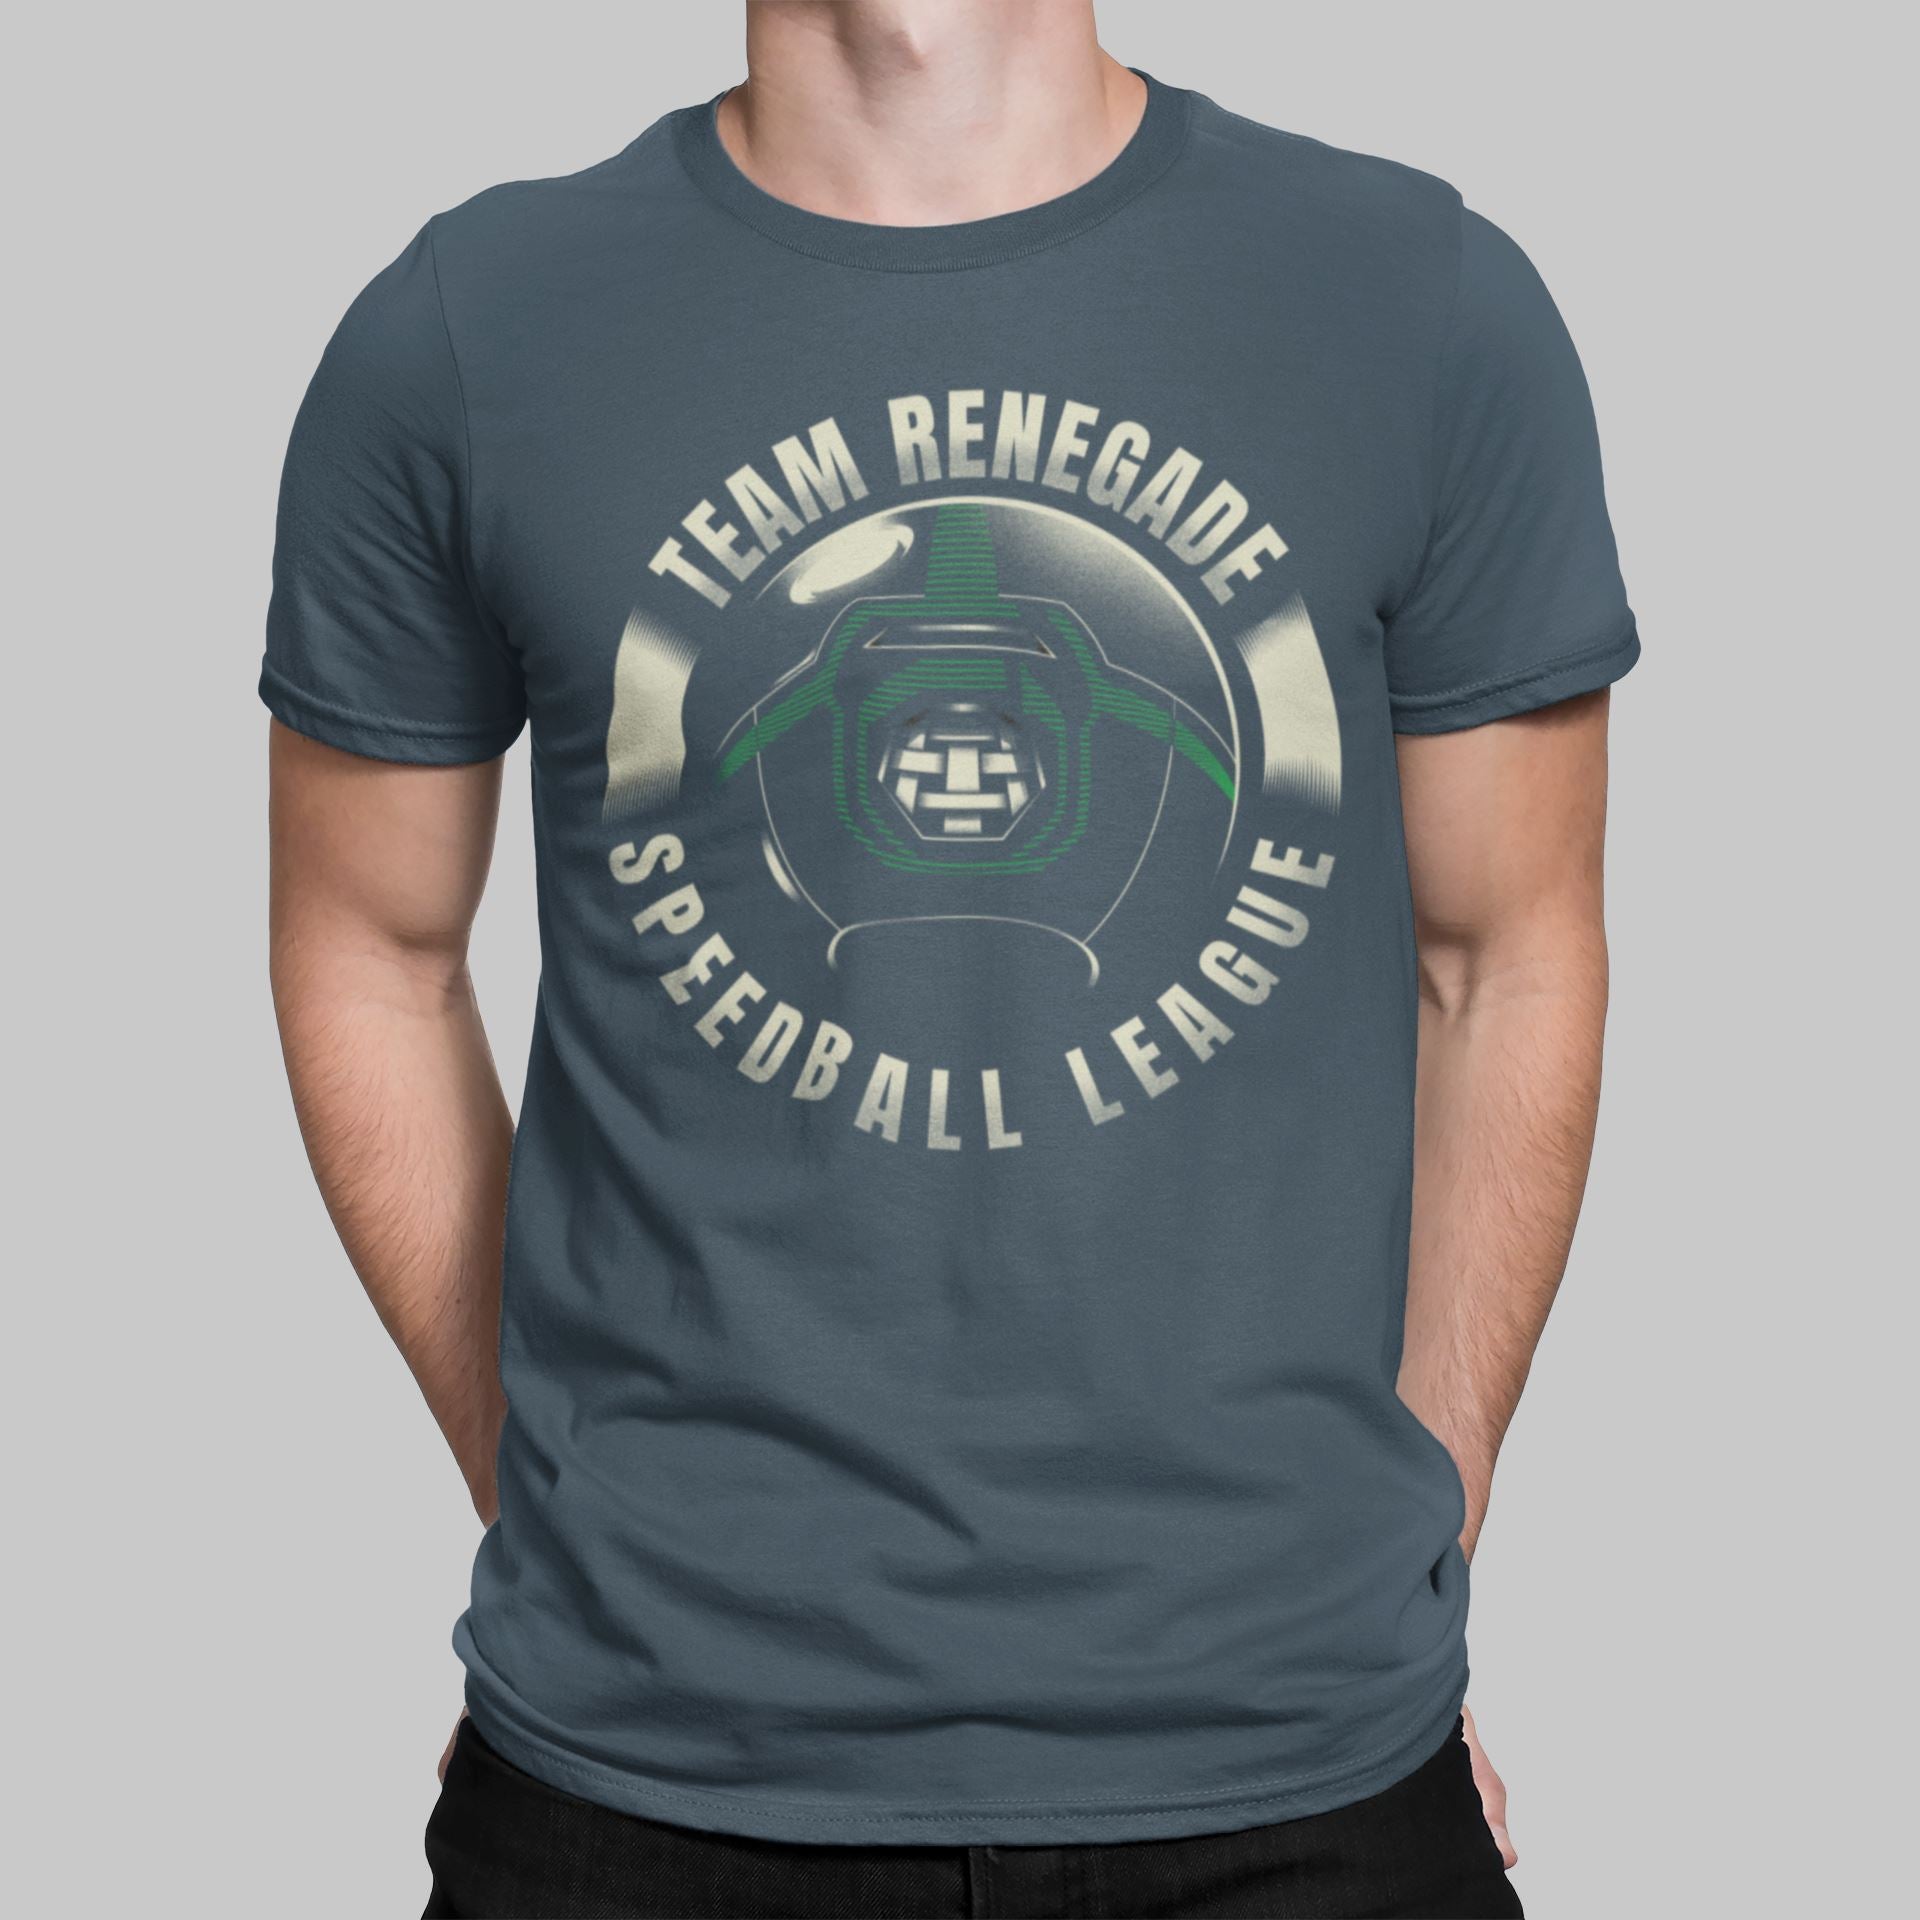 Speedball Team Renegade Retro Gaming T-Shirt T-Shirt Seven Squared 